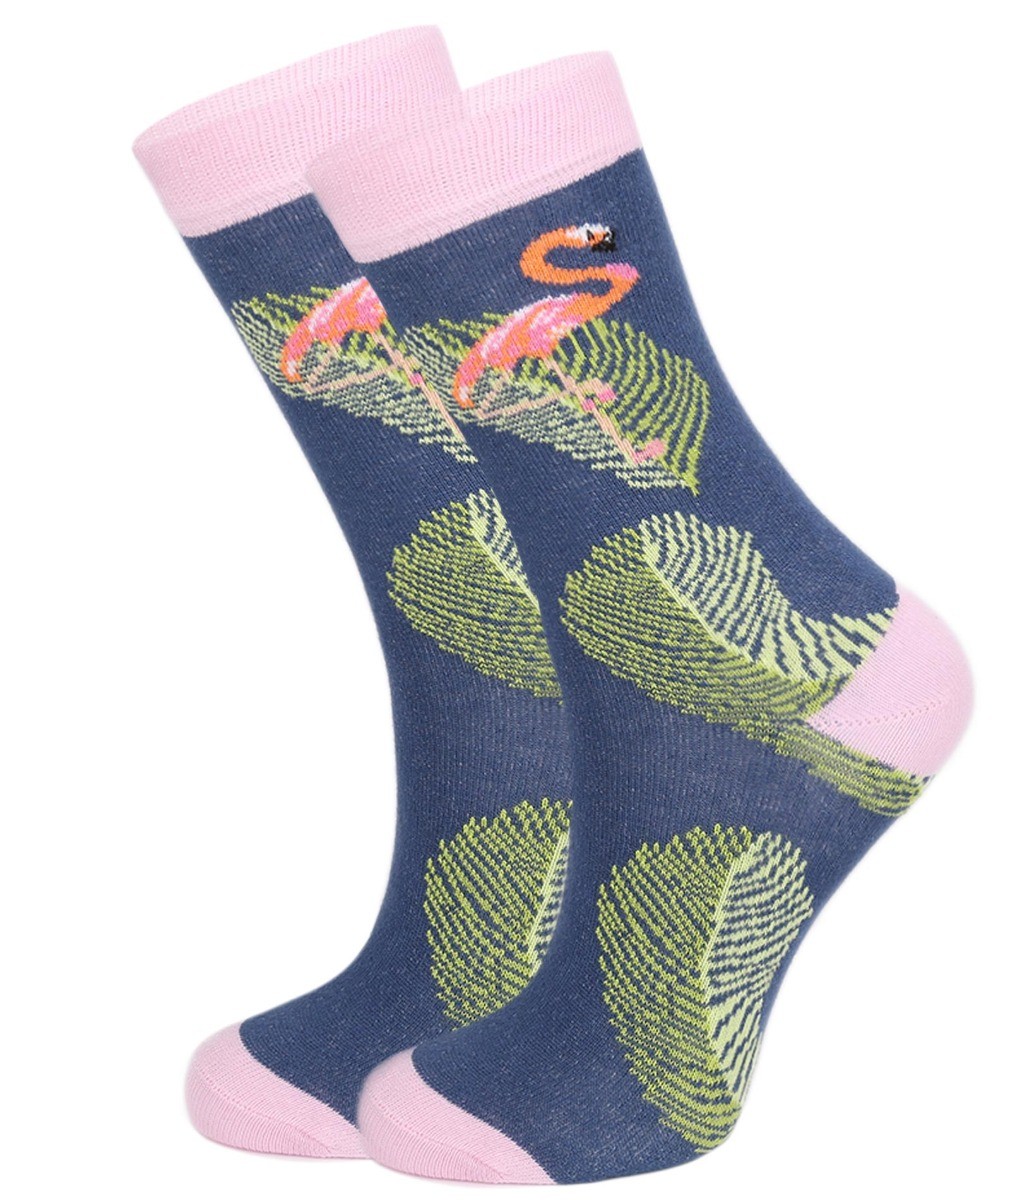 Unisex Kinder Flamingo Socken - Neuheit